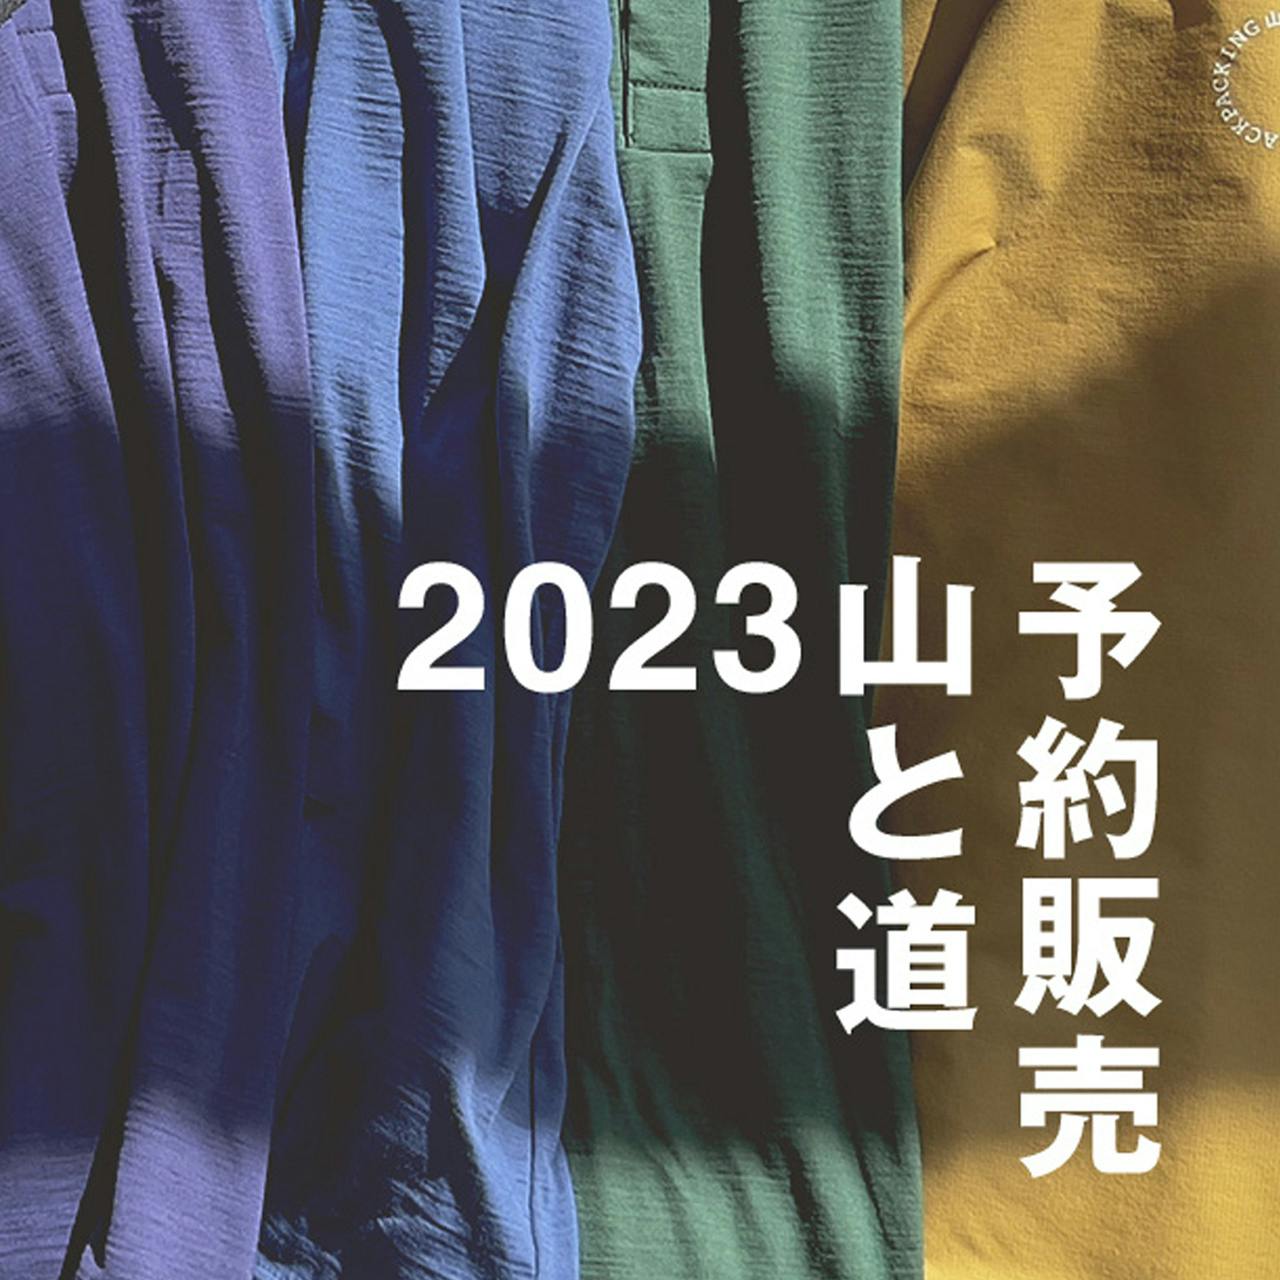 Yamatomichi<br>2023 Preorder<br>Accepting Amendment